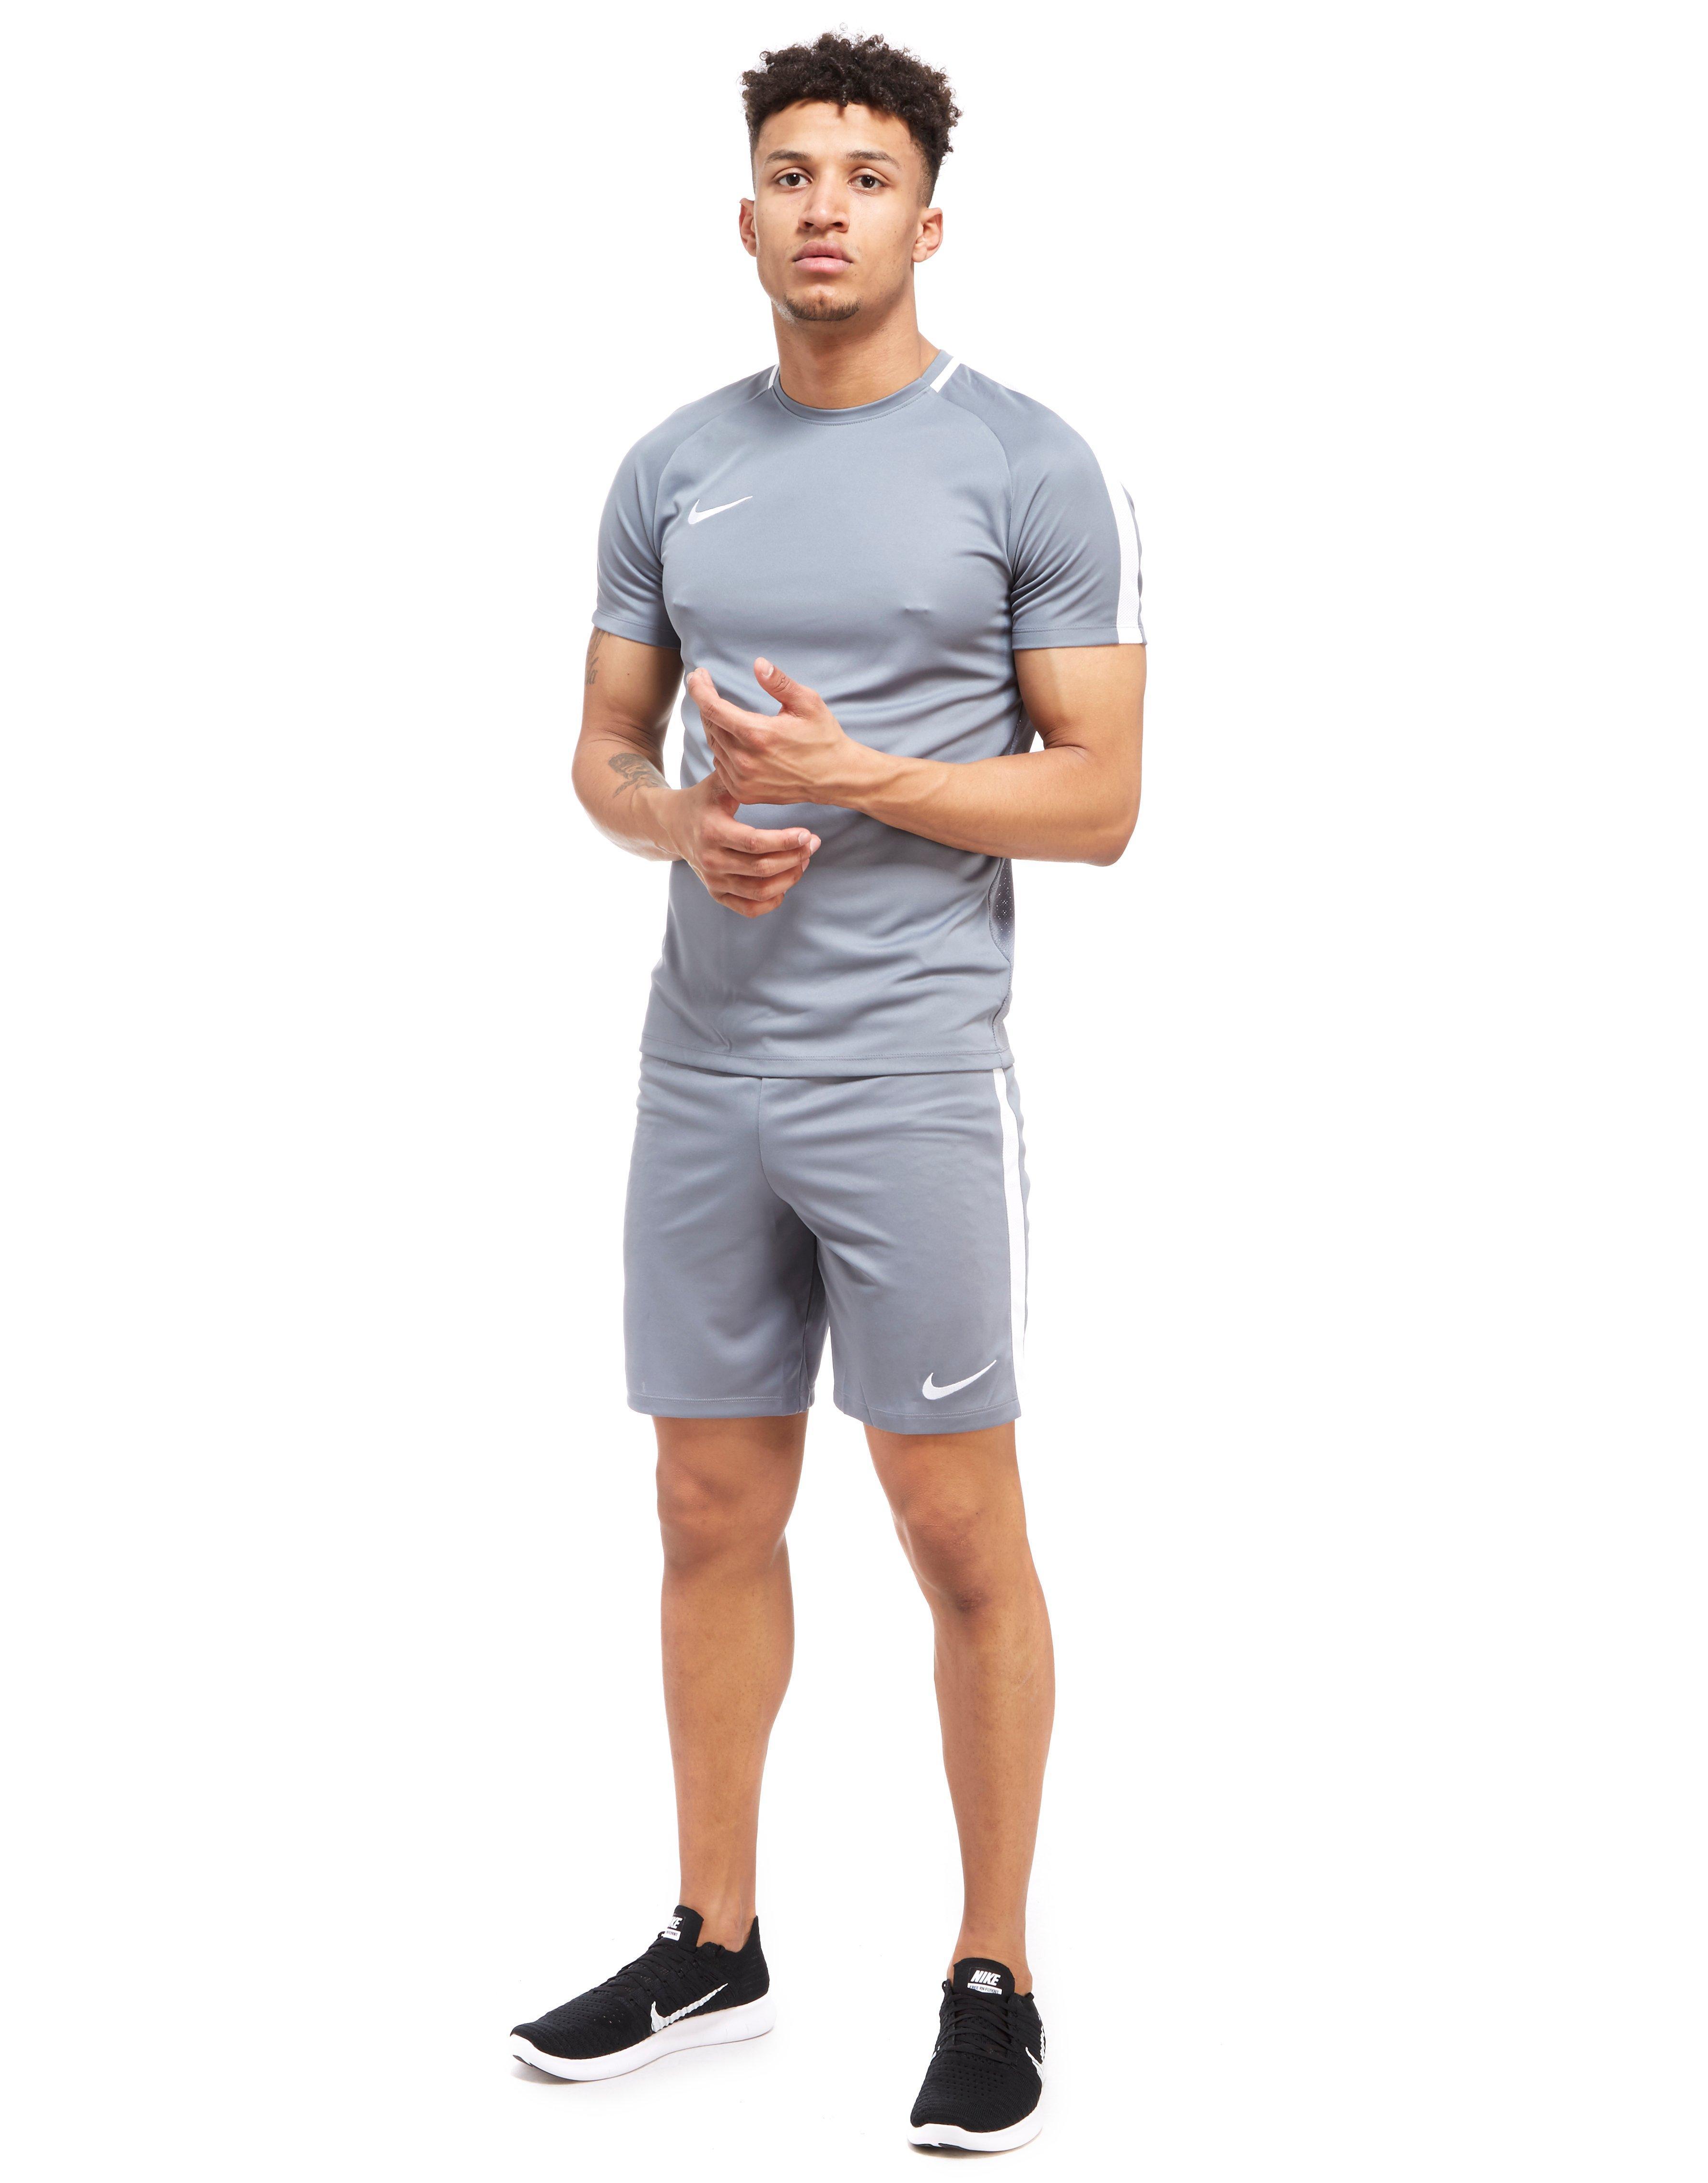 Nike Academy T Shirt Grey Flash Sales, 52% OFF | propolis.az